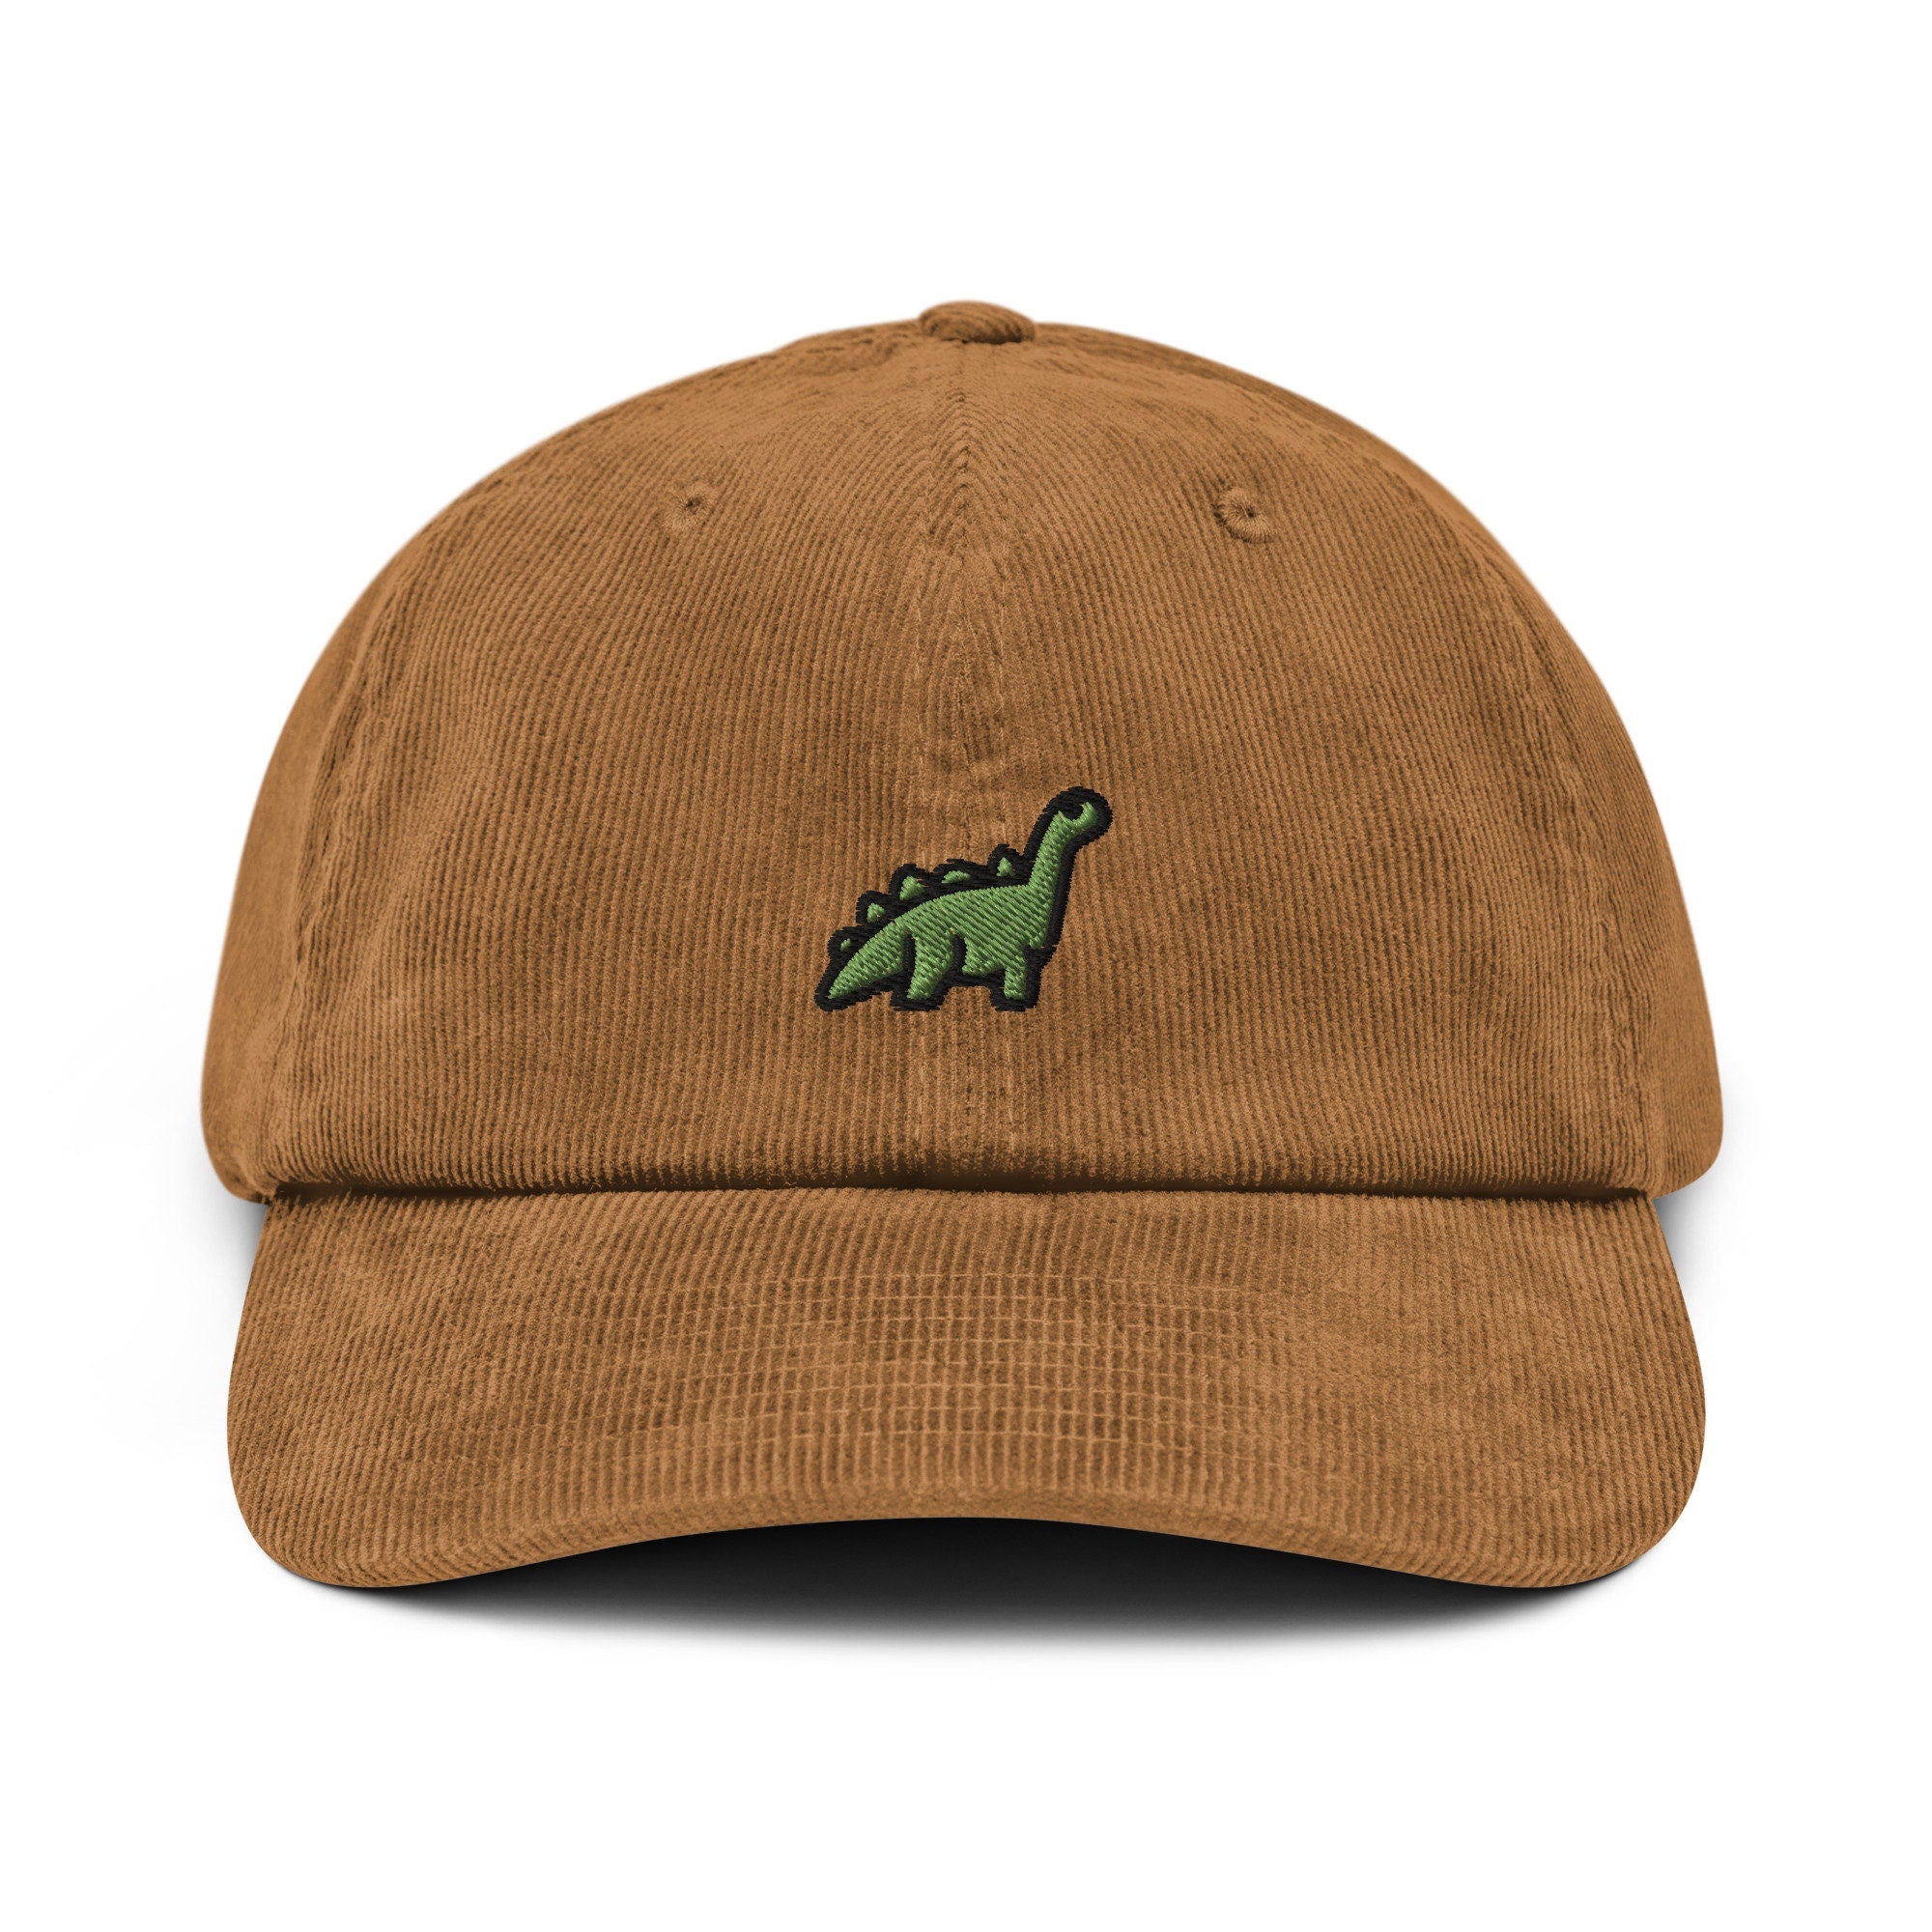 Dinosaur Corduroy Hat, Handmade Embroidered Corduroy Dad Cap - Multiple Colors